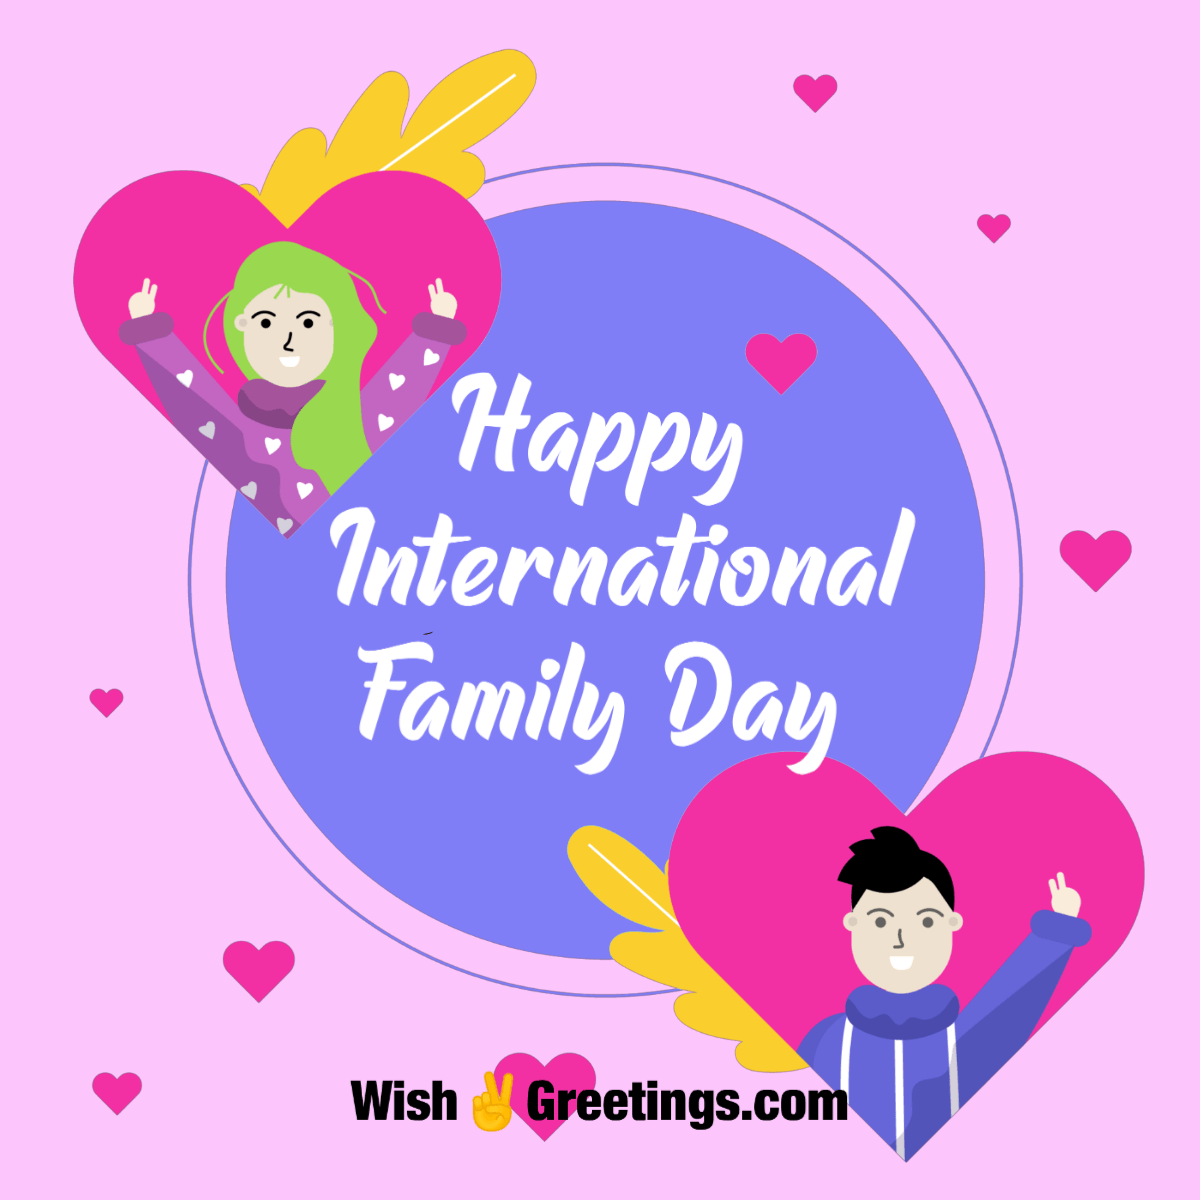 Happy International Family Day Image